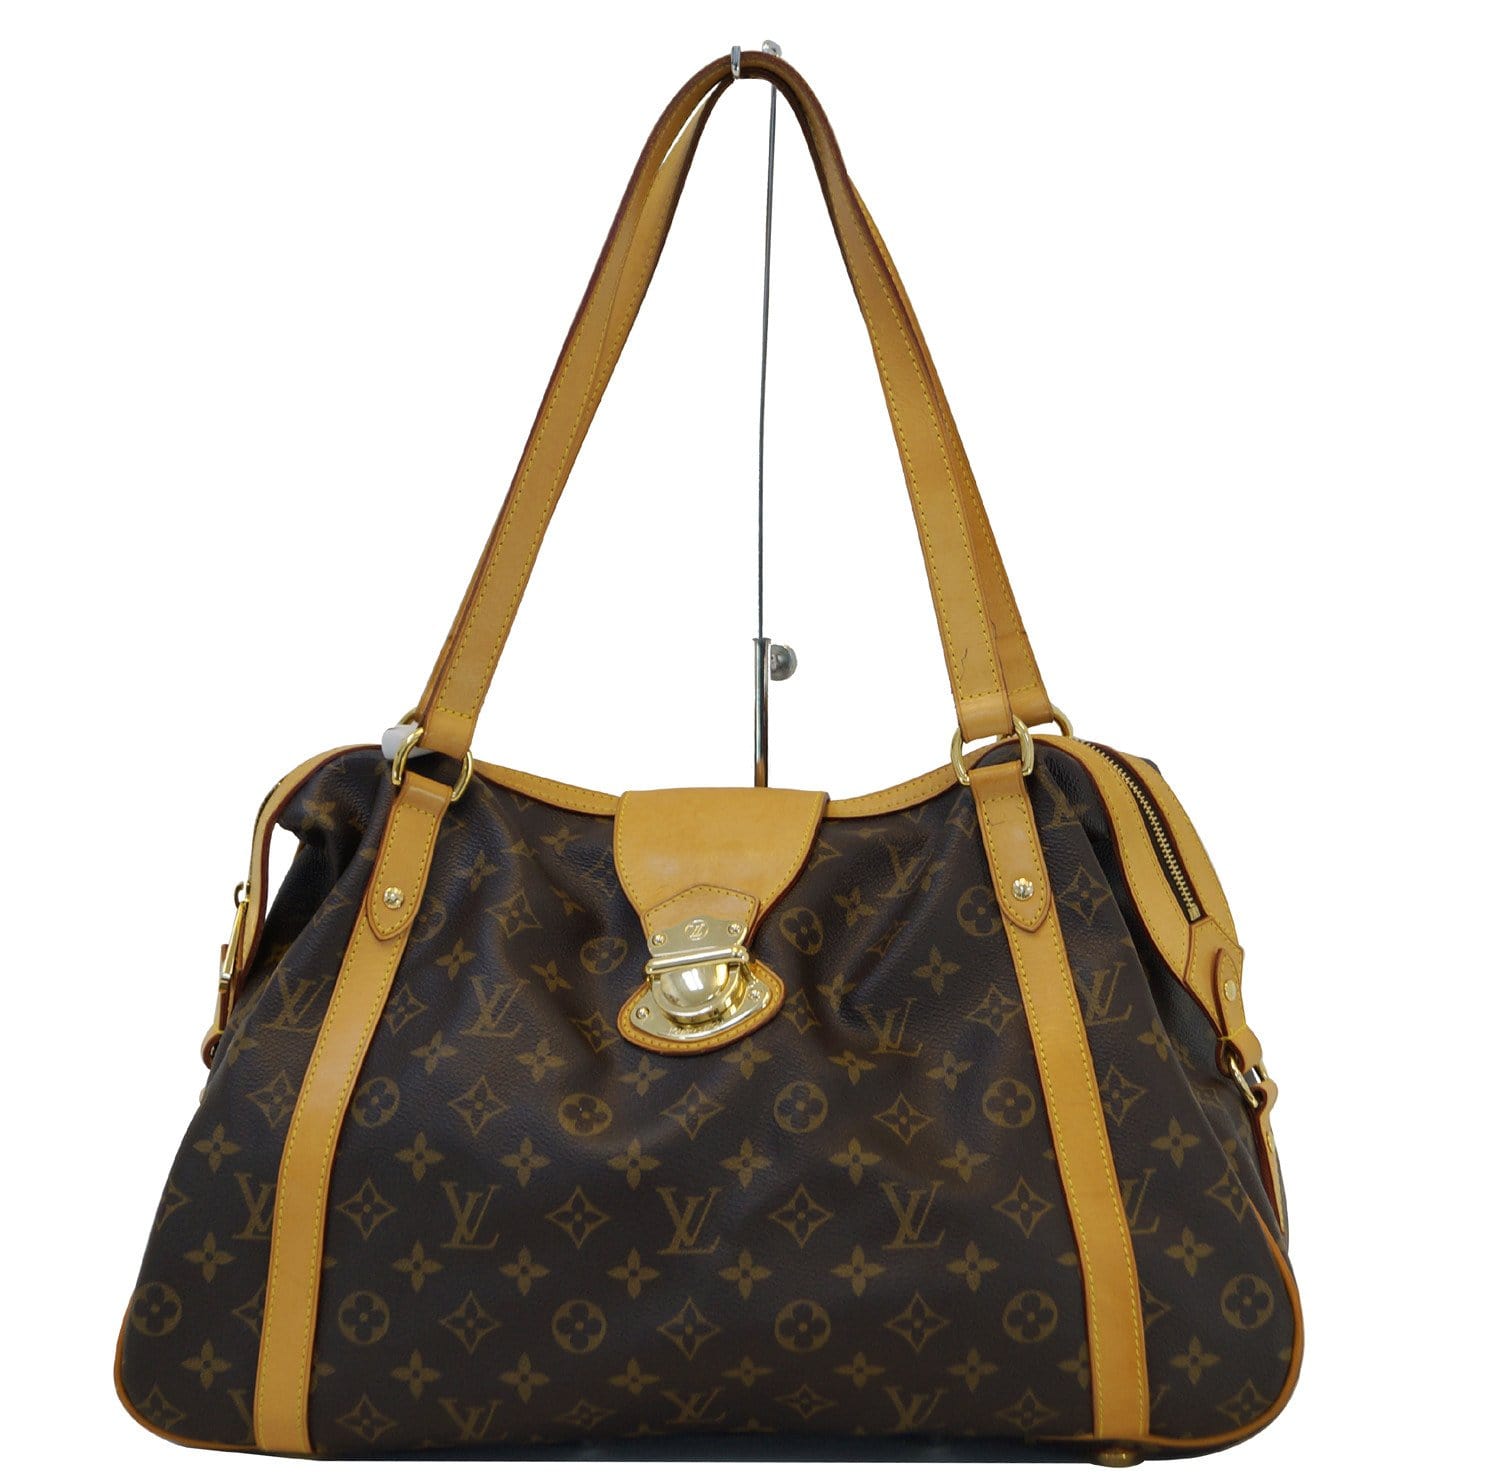 Shop Louis Vuitton Monogram Unisex Street Style Bag in Bag Totes (M58907)  by Pureet